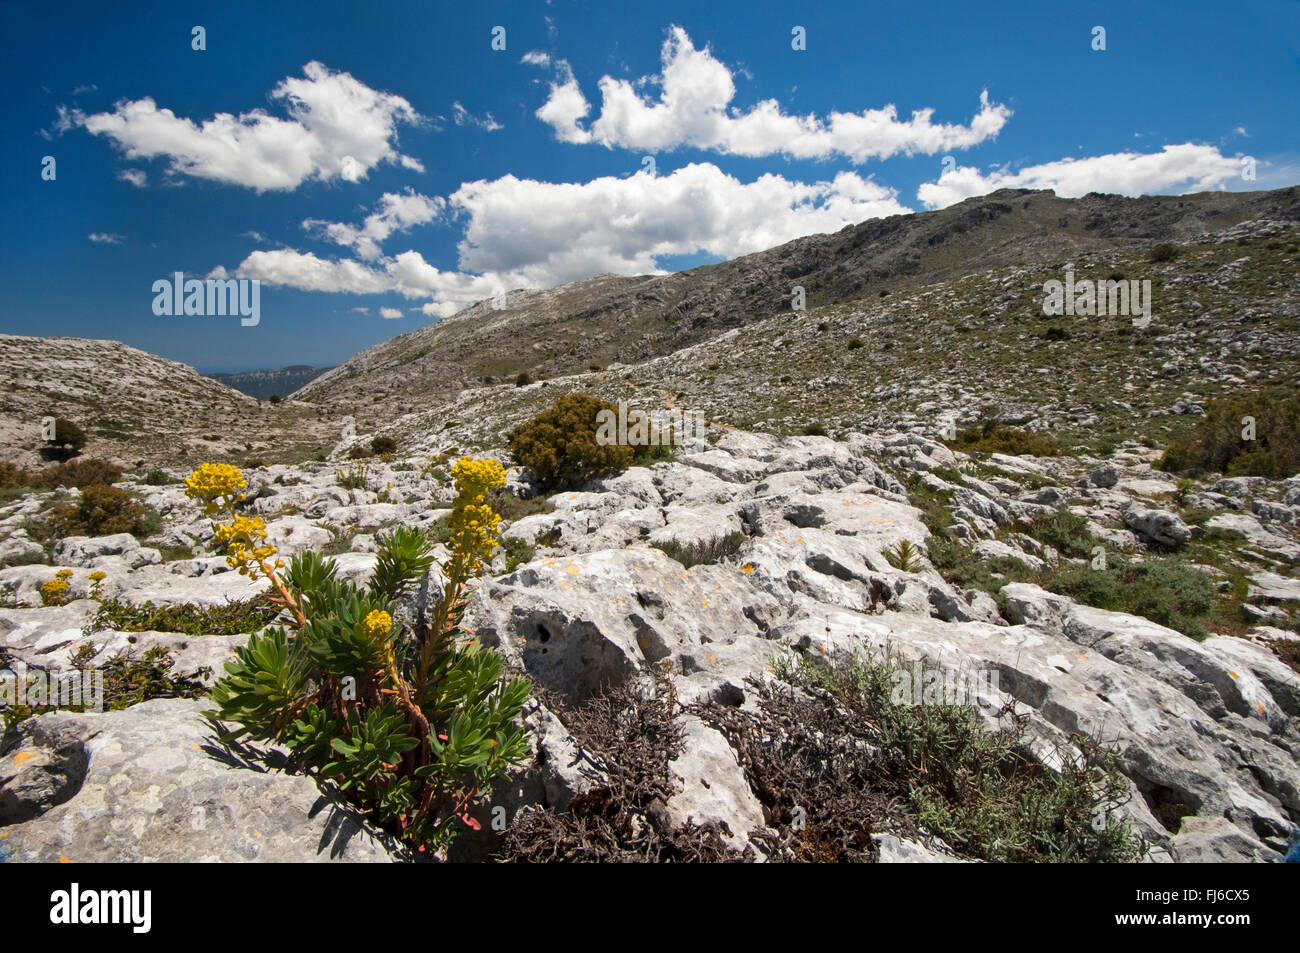 Oliena,Nuoro,Sardinia,Italy, 05/2014. Landscape view of the wild and rocky Corrasi mountain in the Supramonte, Barbagia region. Stock Photo